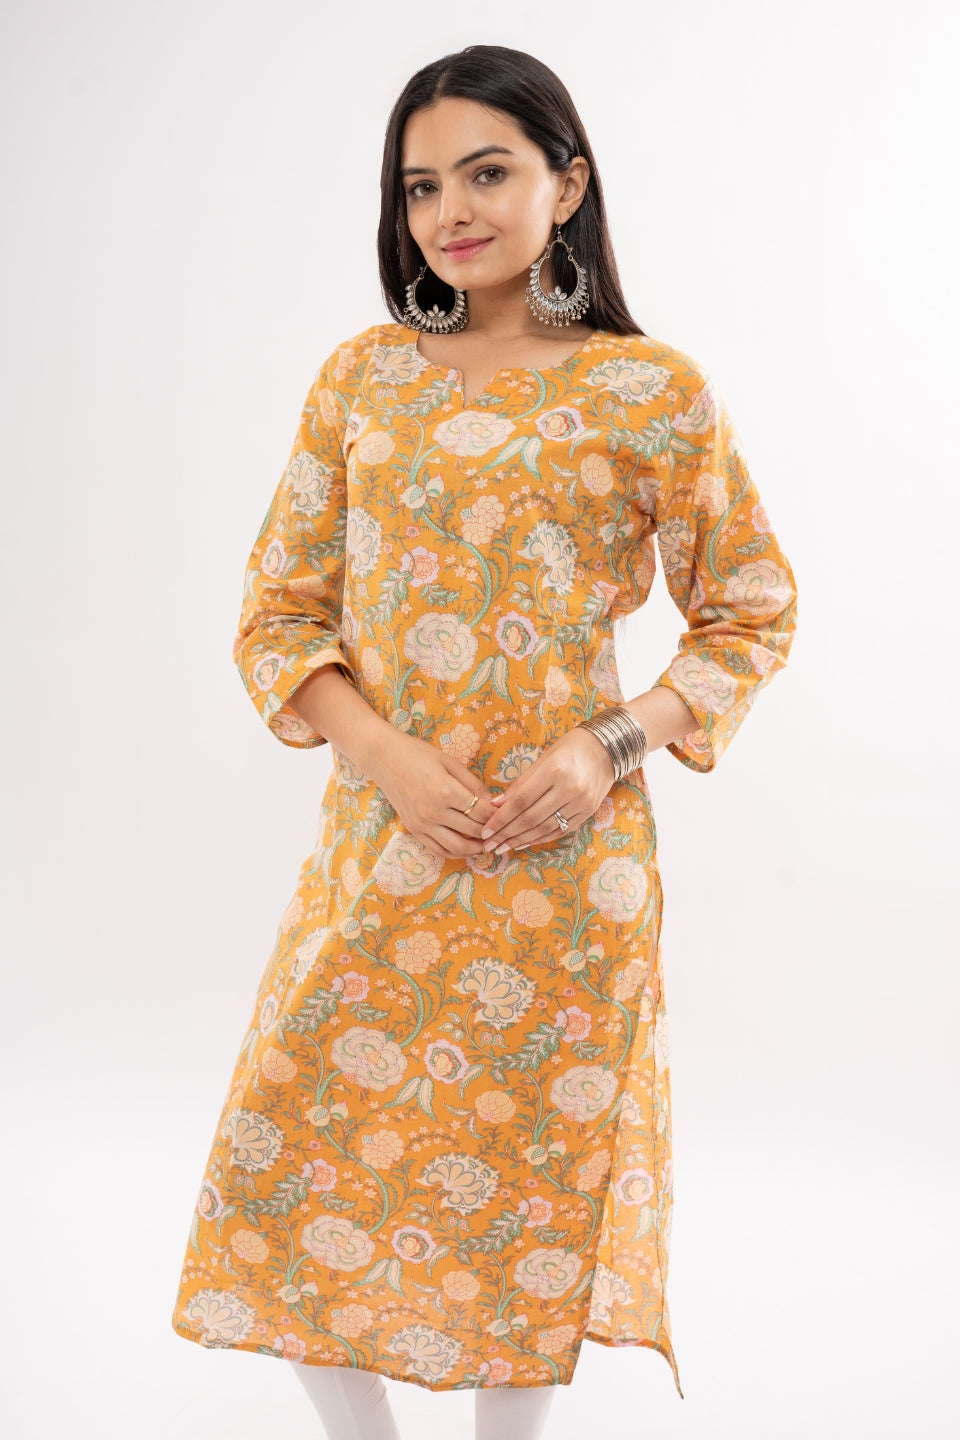 Ekisha women's cotton yellow printed straight floral kurta kurti round neck, detailed side view